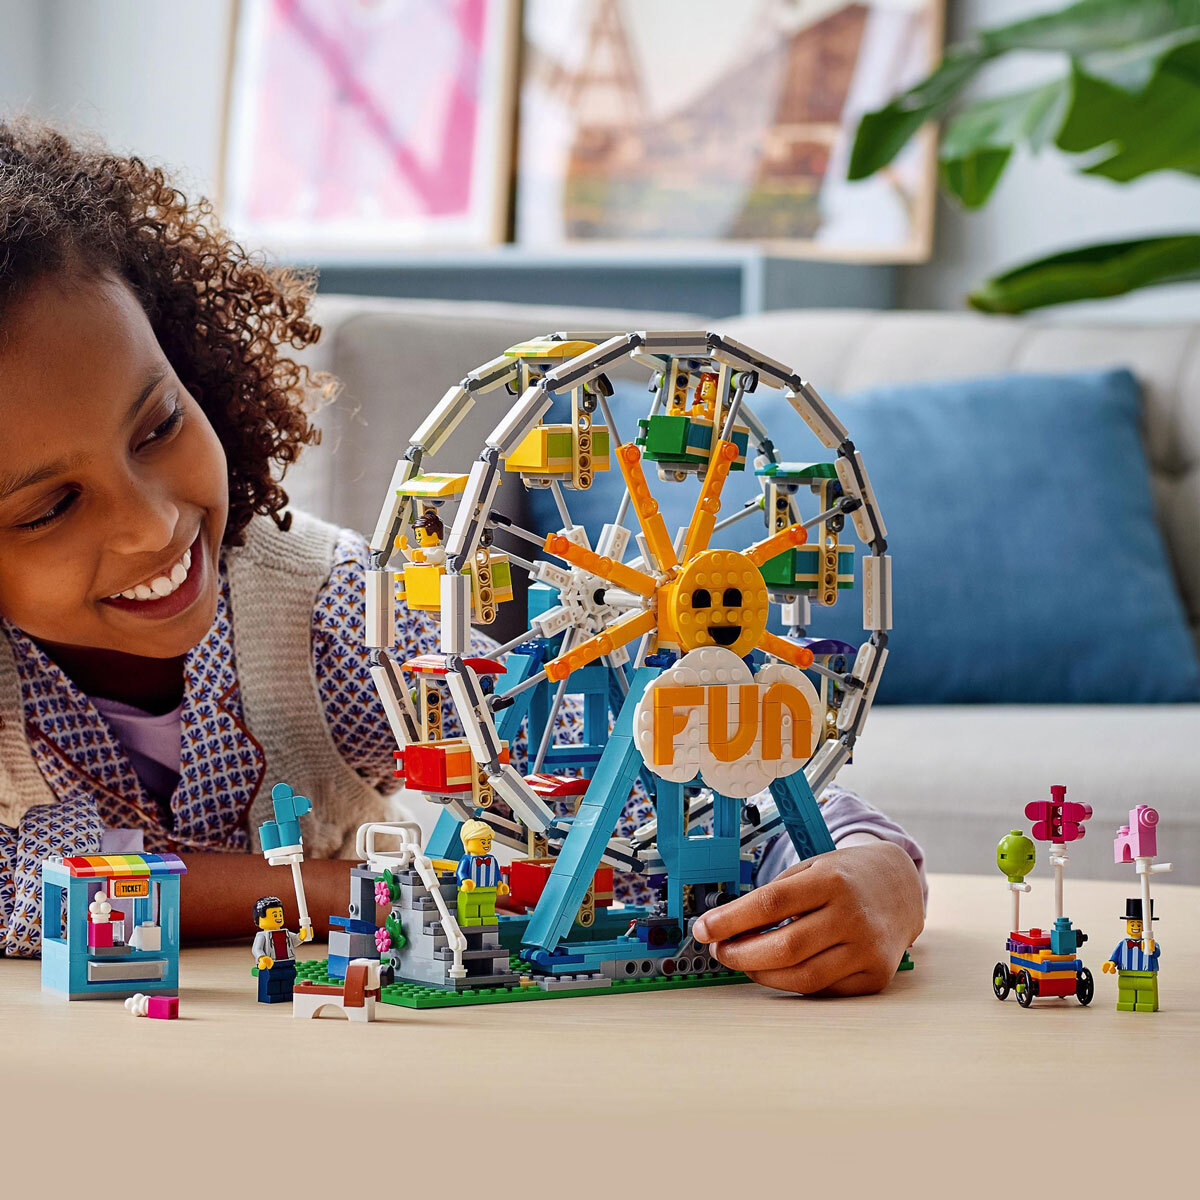 Buy LEGO Creator Ferris Wheel Lifestyle Image at costco.co.uk